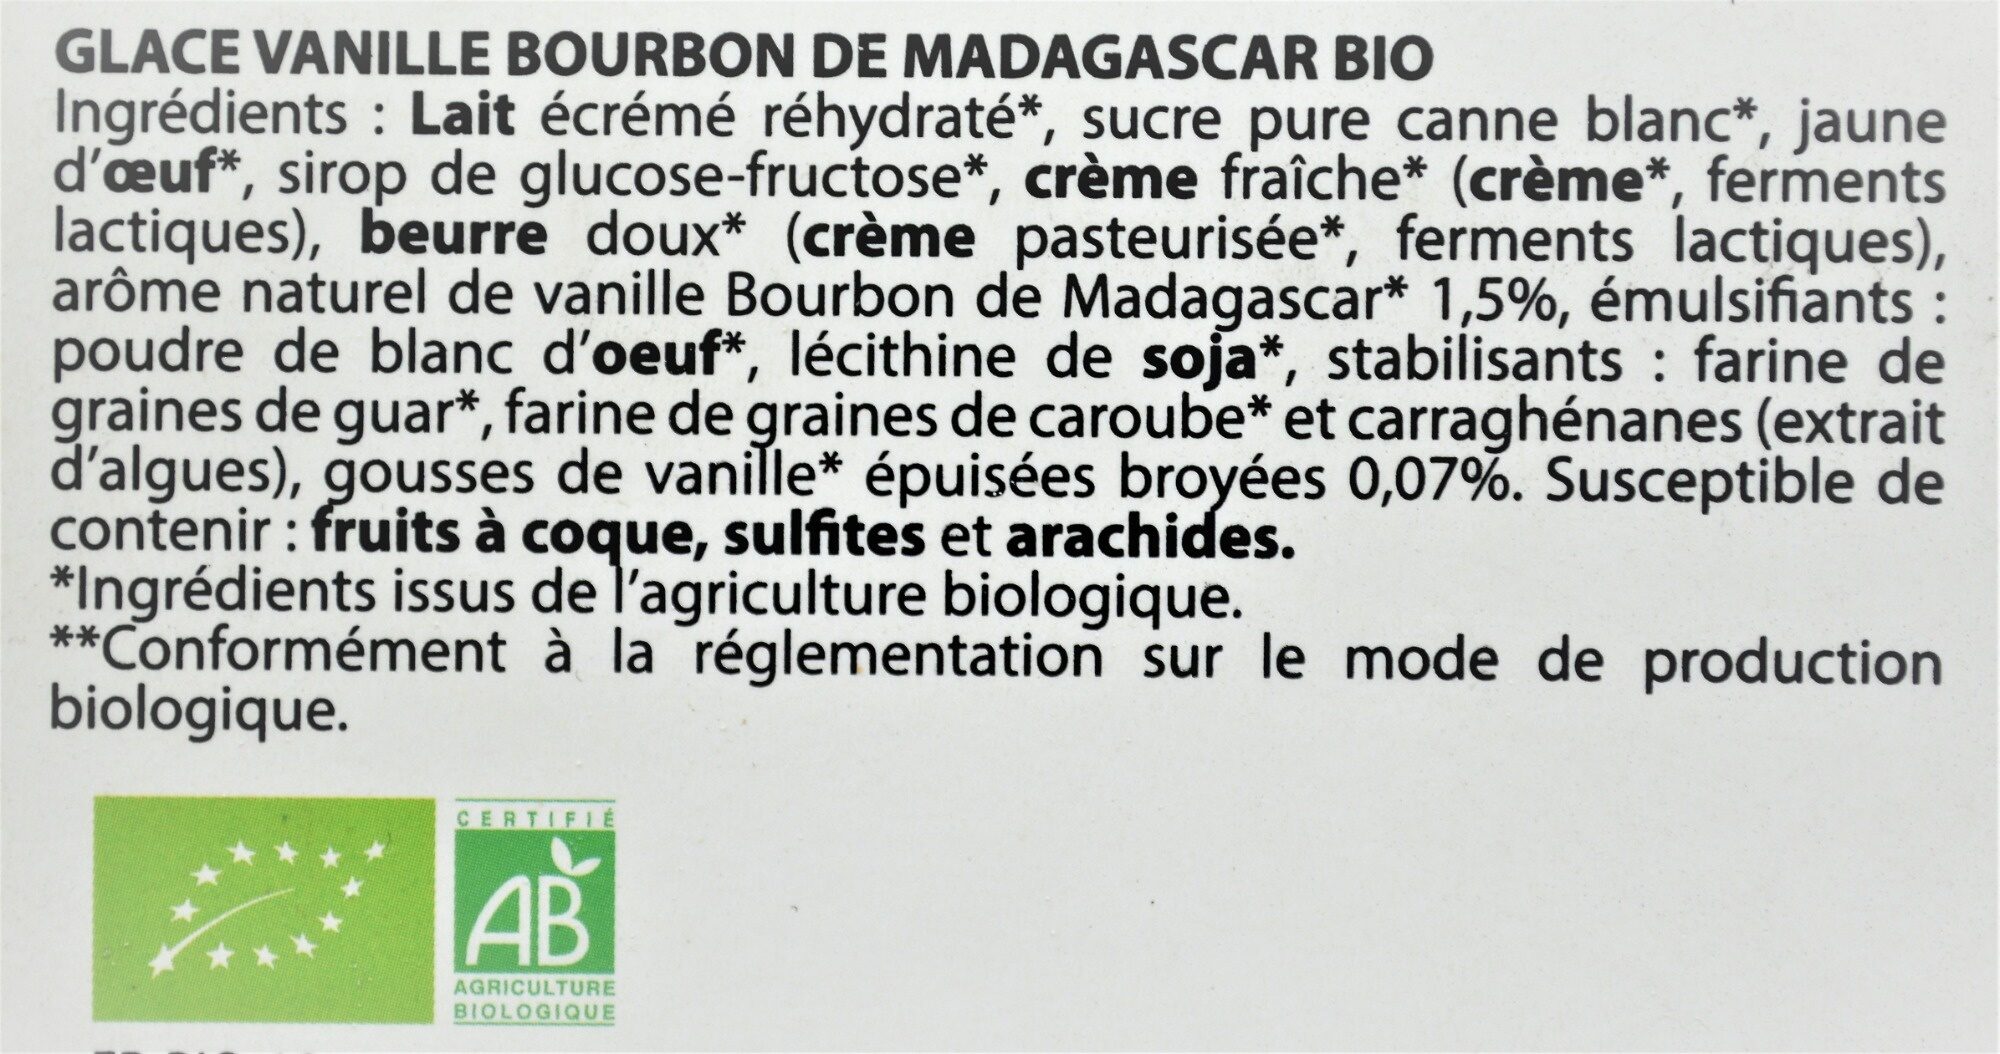 Glace VANILLE BOURBON DE MADAGASCAR BIO - Ingredients - fr